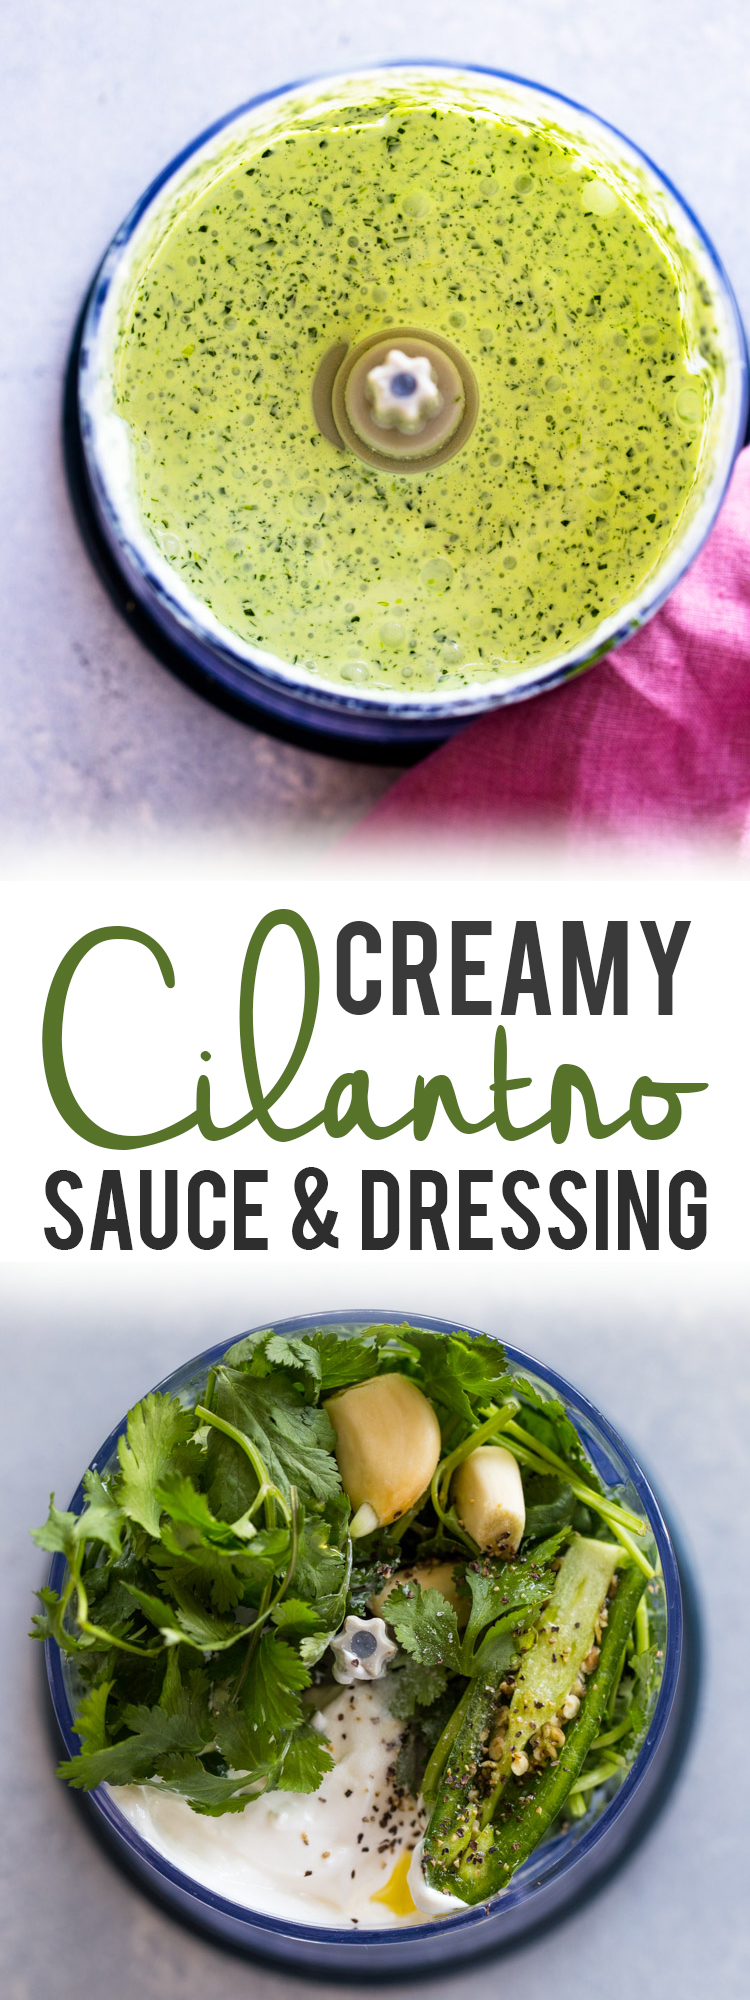 Creamy Cilantro Sauce & Dressing 